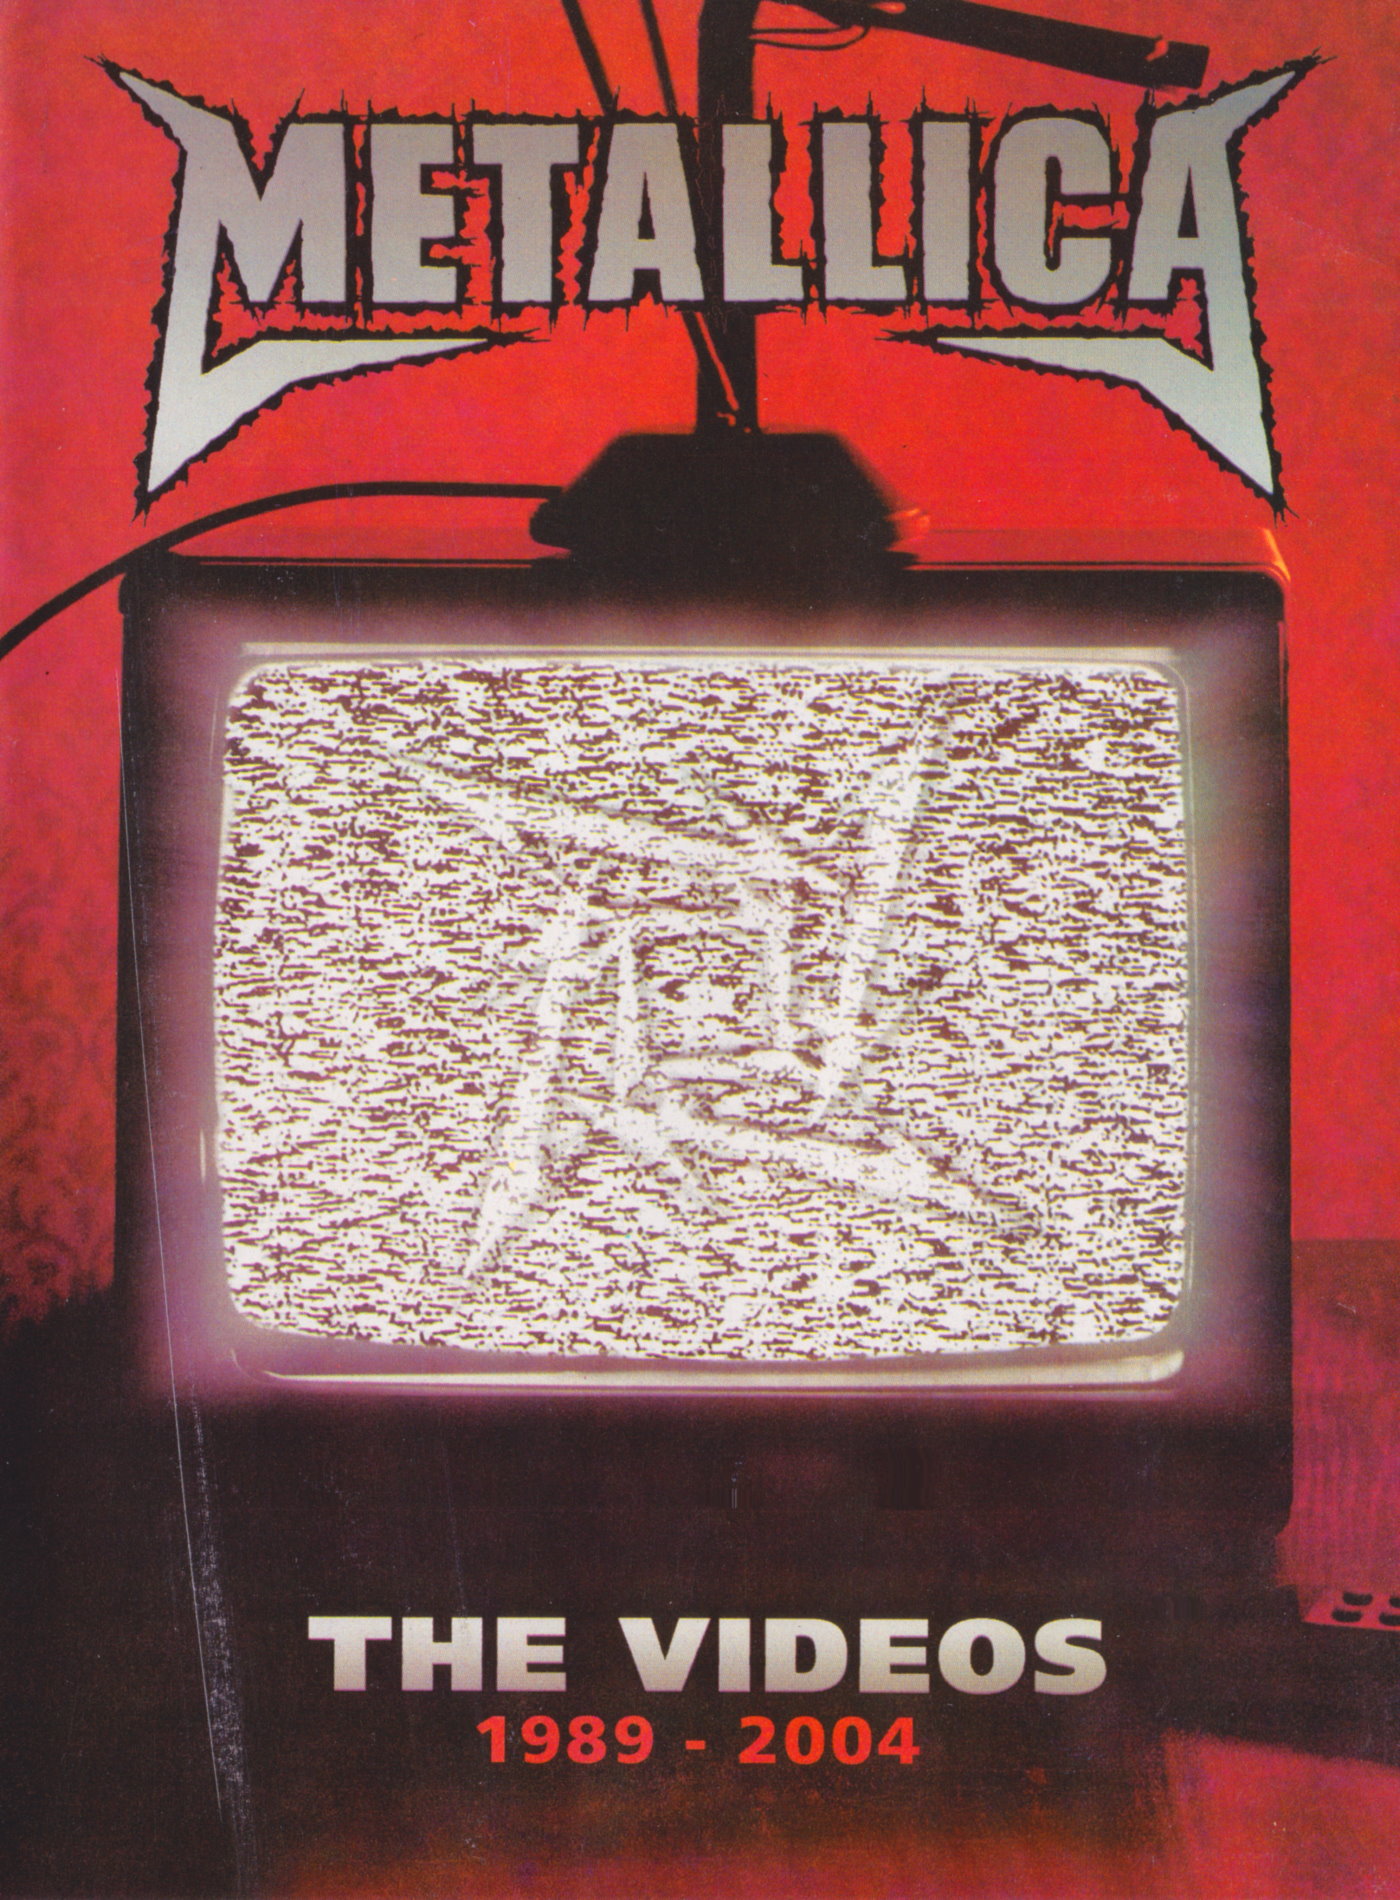 Cover - Metallica - The Videos 1989-2004.jpg